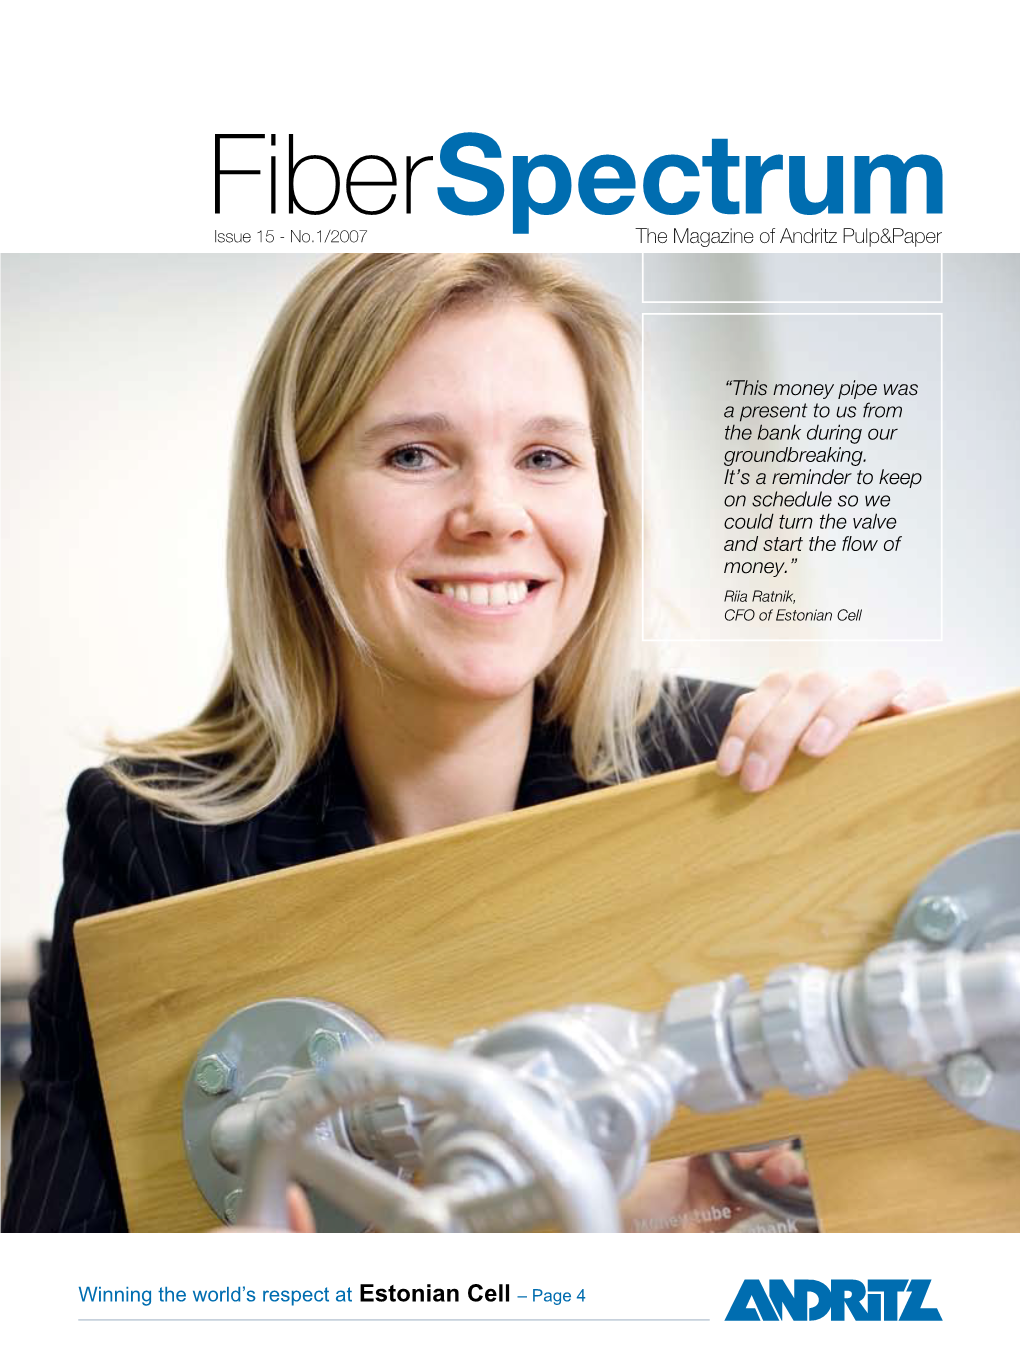 Fiberspectrum Issue 15 - No.1/2007 the Magazine of Andritz Pulp&Paper